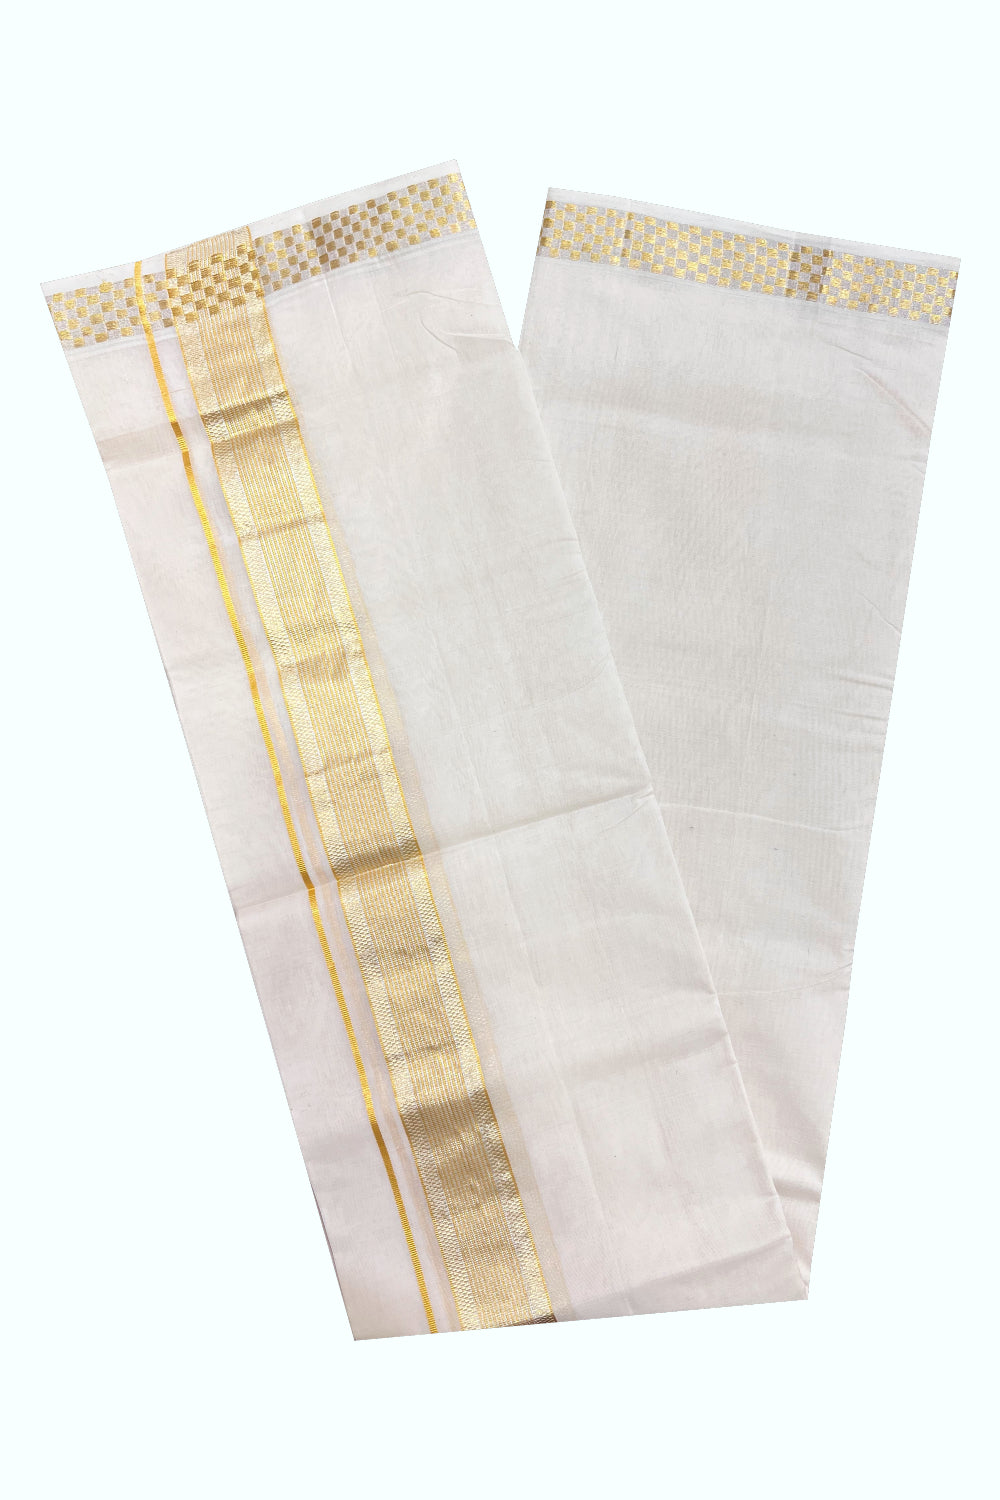 Southloom Super Premium Balaramapuram Unakkupaavu Handloom Double Mundu with Silver and Golden Kasavu Woven Border